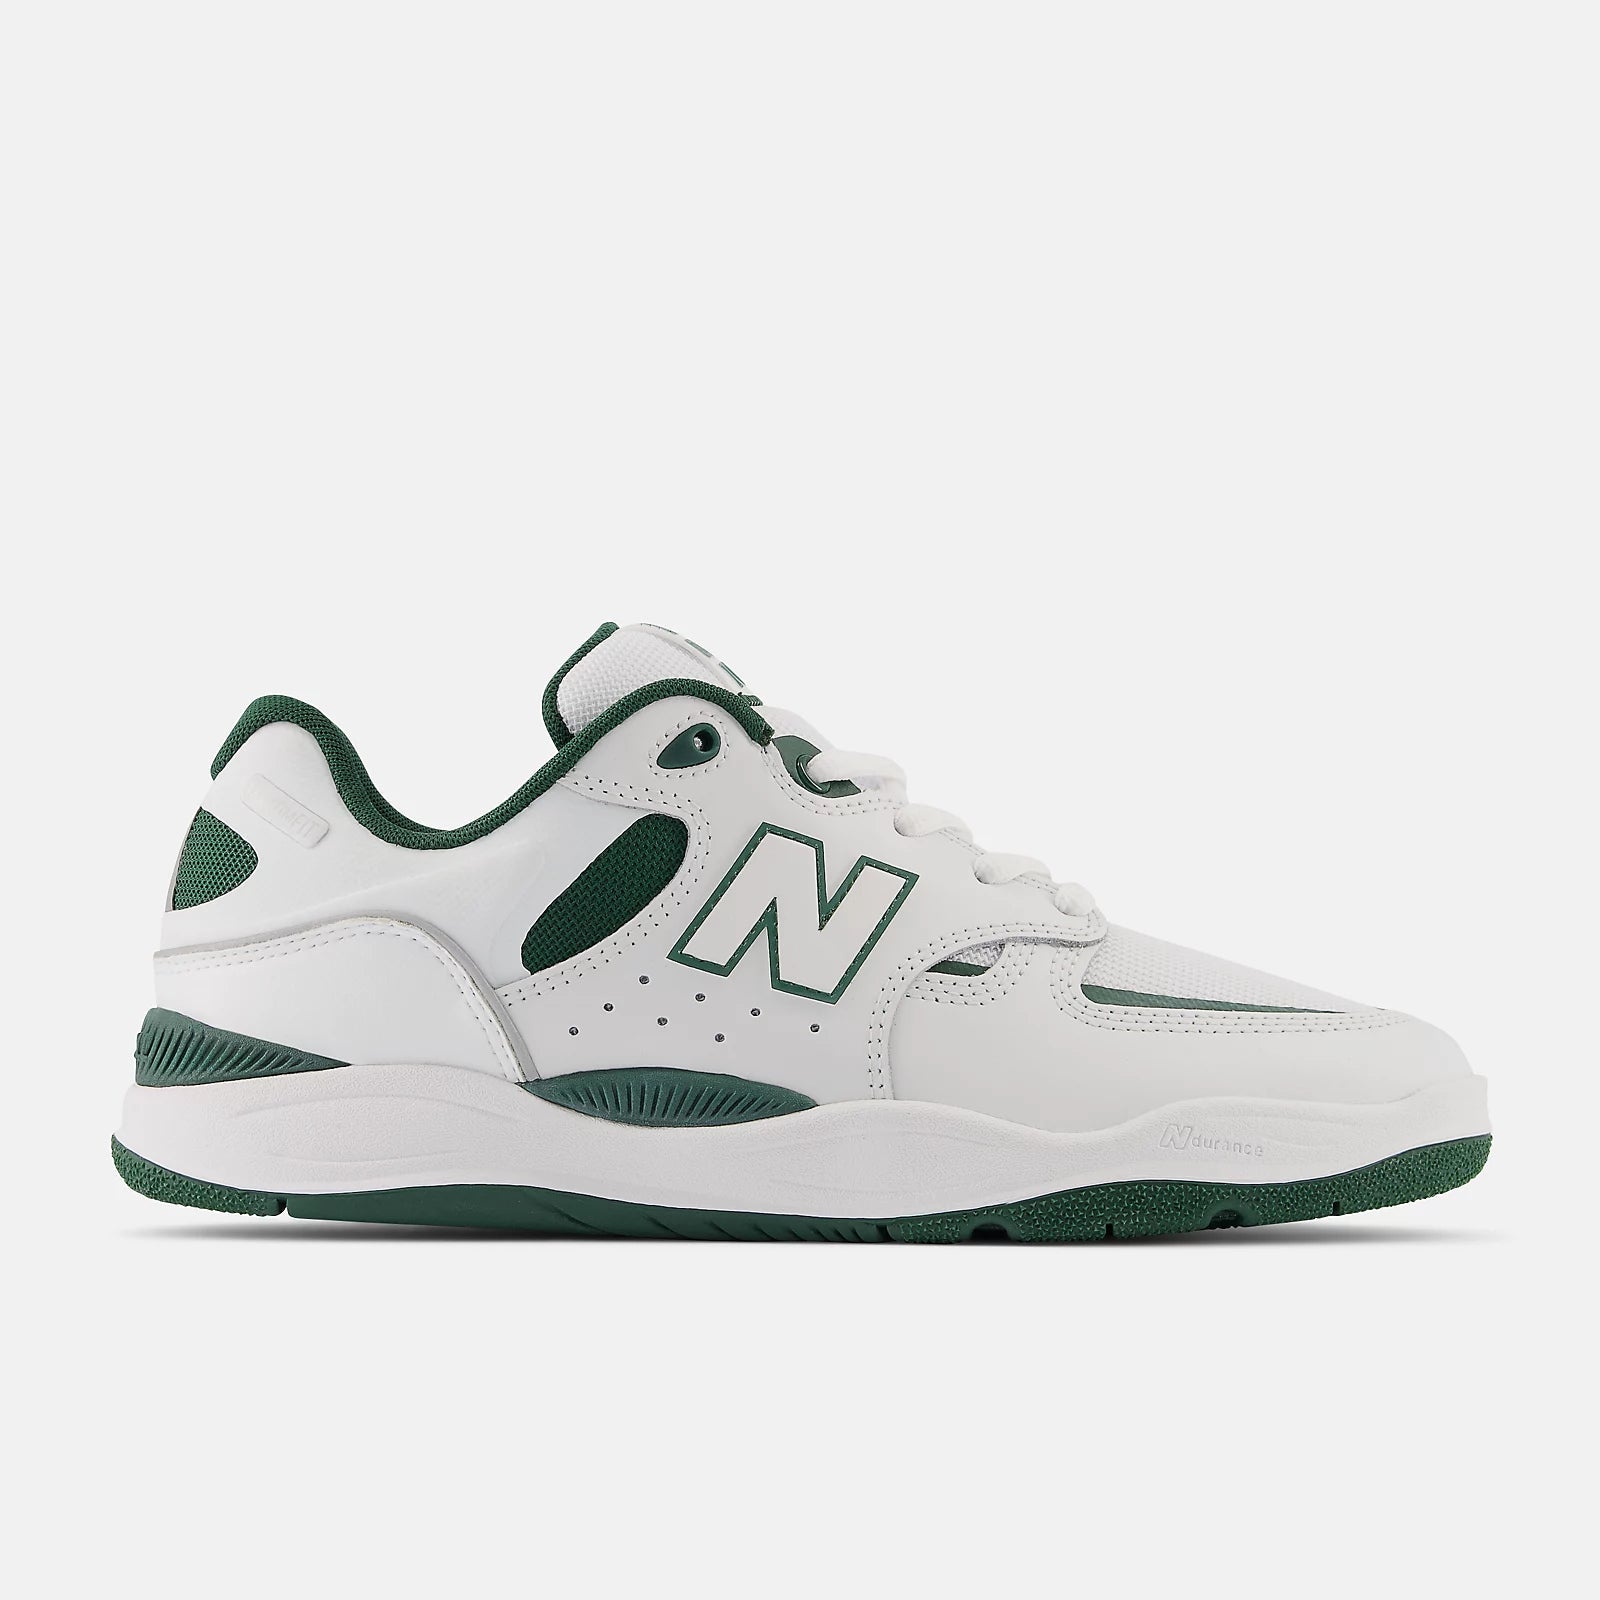 NB NUMERIC Tiago Lemos 1010 Shoes White/Green Men's Skate Shoes New Balance 